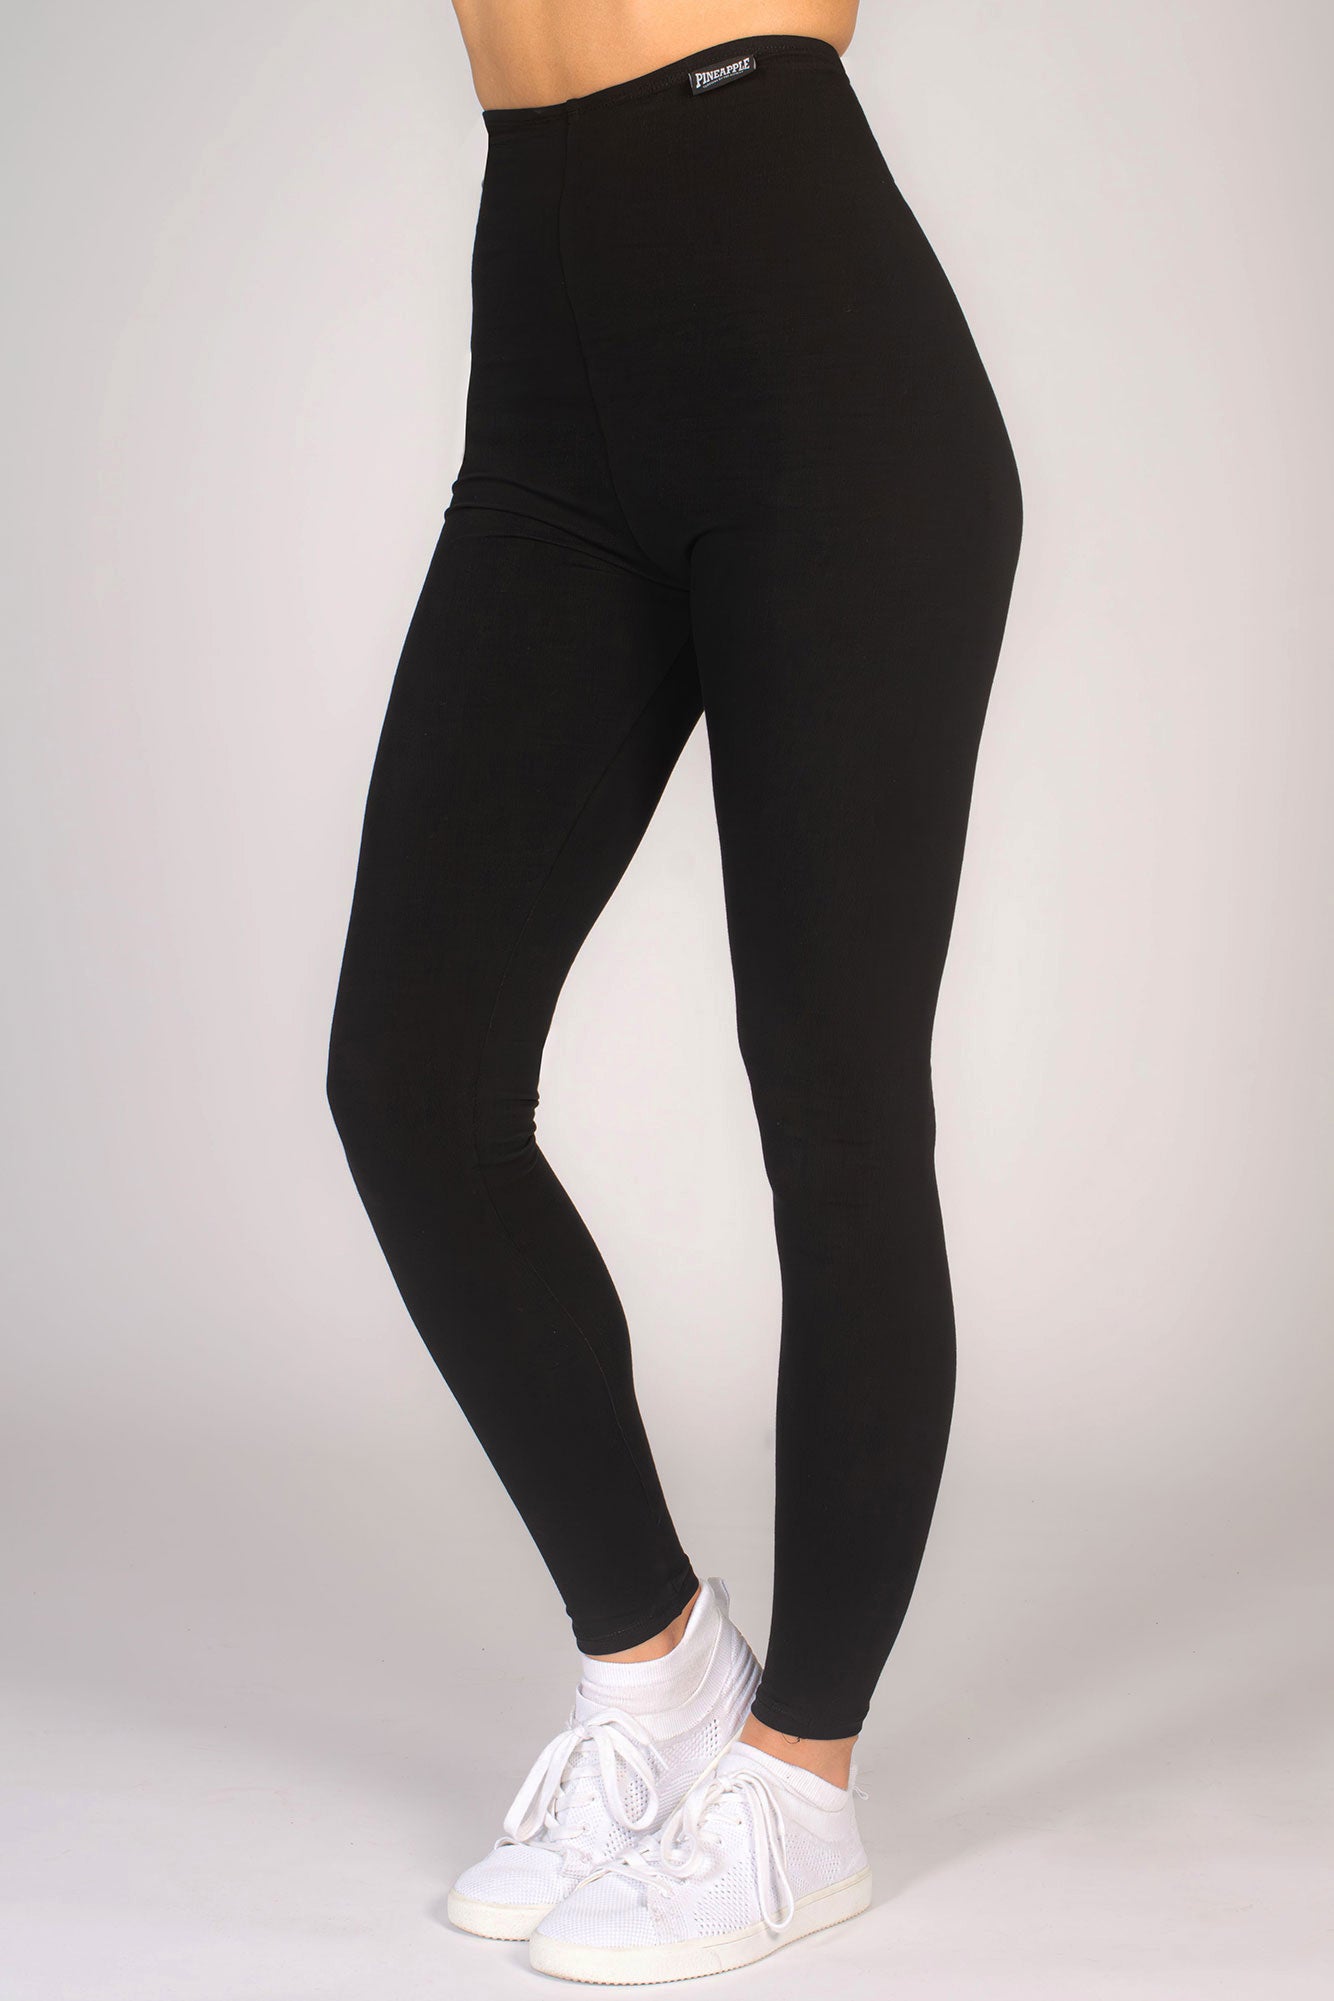 womens black high waisted leggings PT18630A1 01